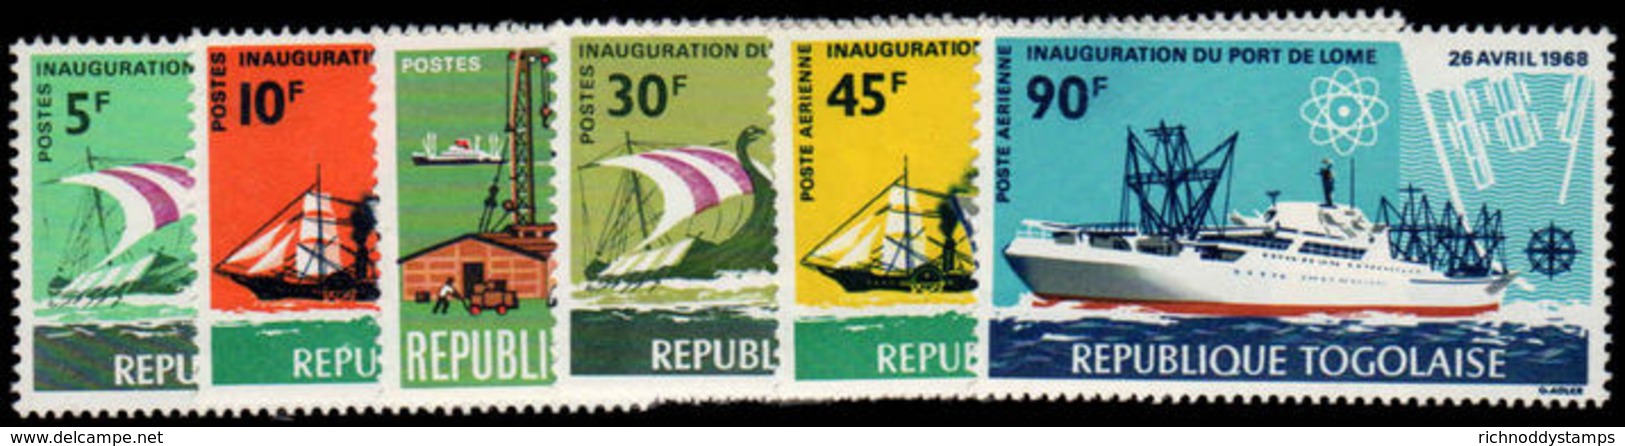 Togo 1968 Ships Unmounted Mint. - Togo (1960-...)